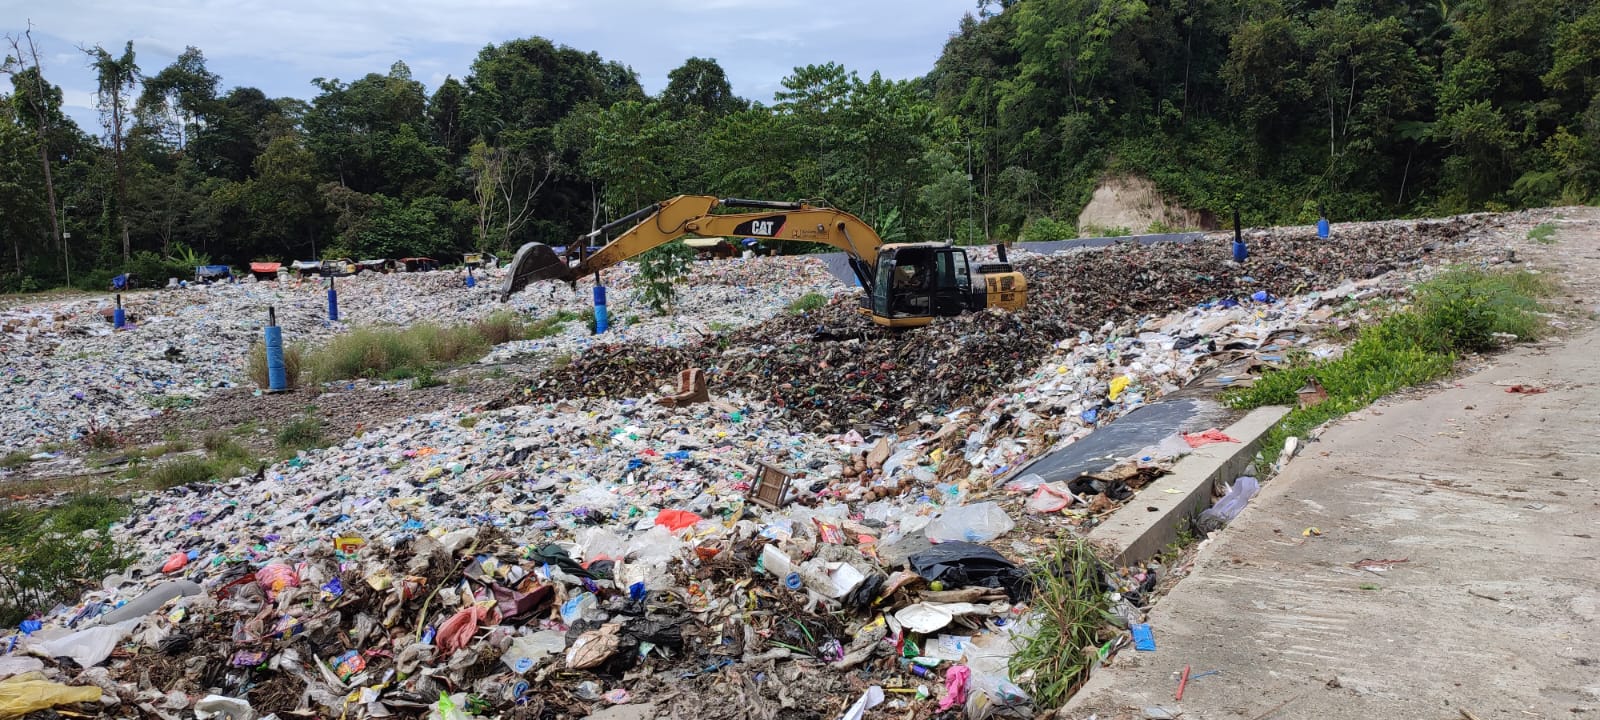 Terkendala Alat Daur Ulang Belum Tersedia, Penumpukan Sampah di TPA Pelawi OKU Selatan Terus Meningkat